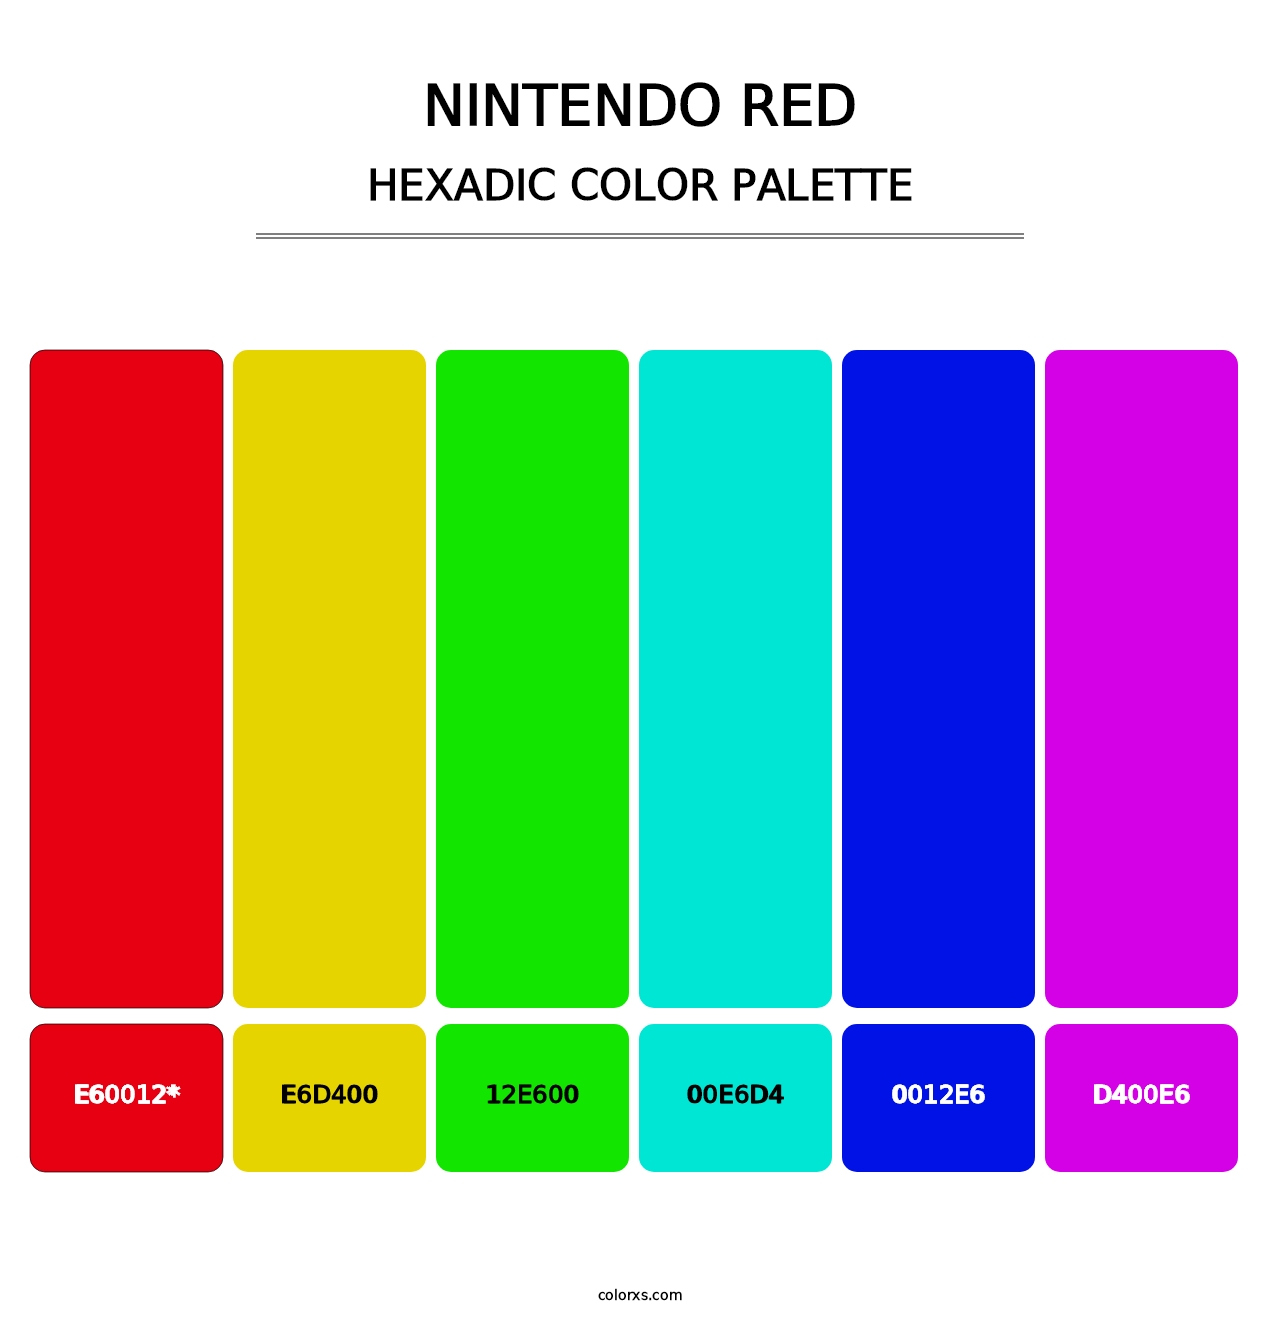 Nintendo Red - Hexadic Color Palette